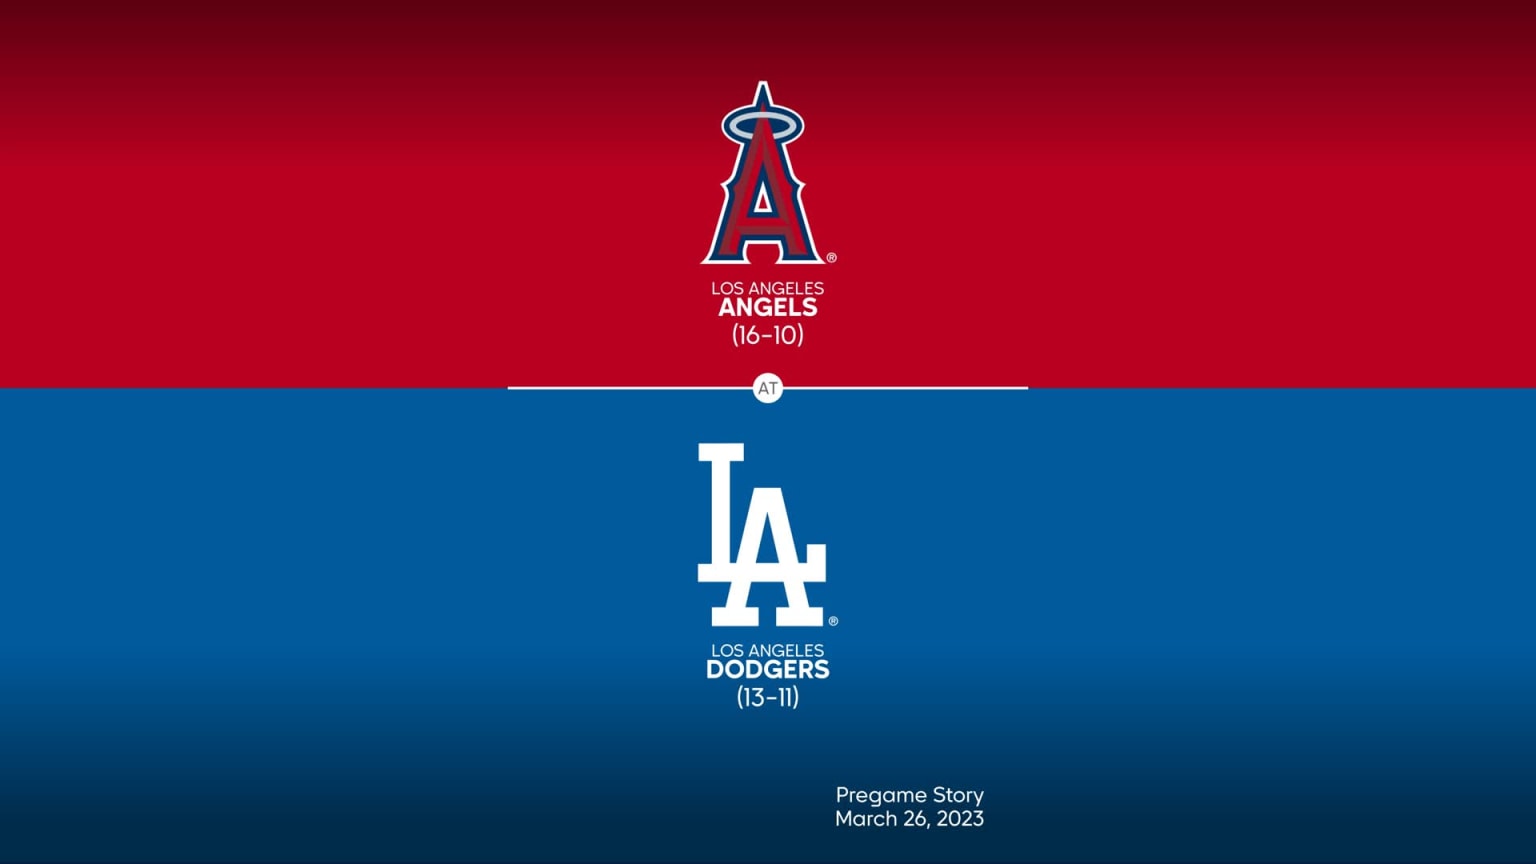 Dodgers angels vs angeles los